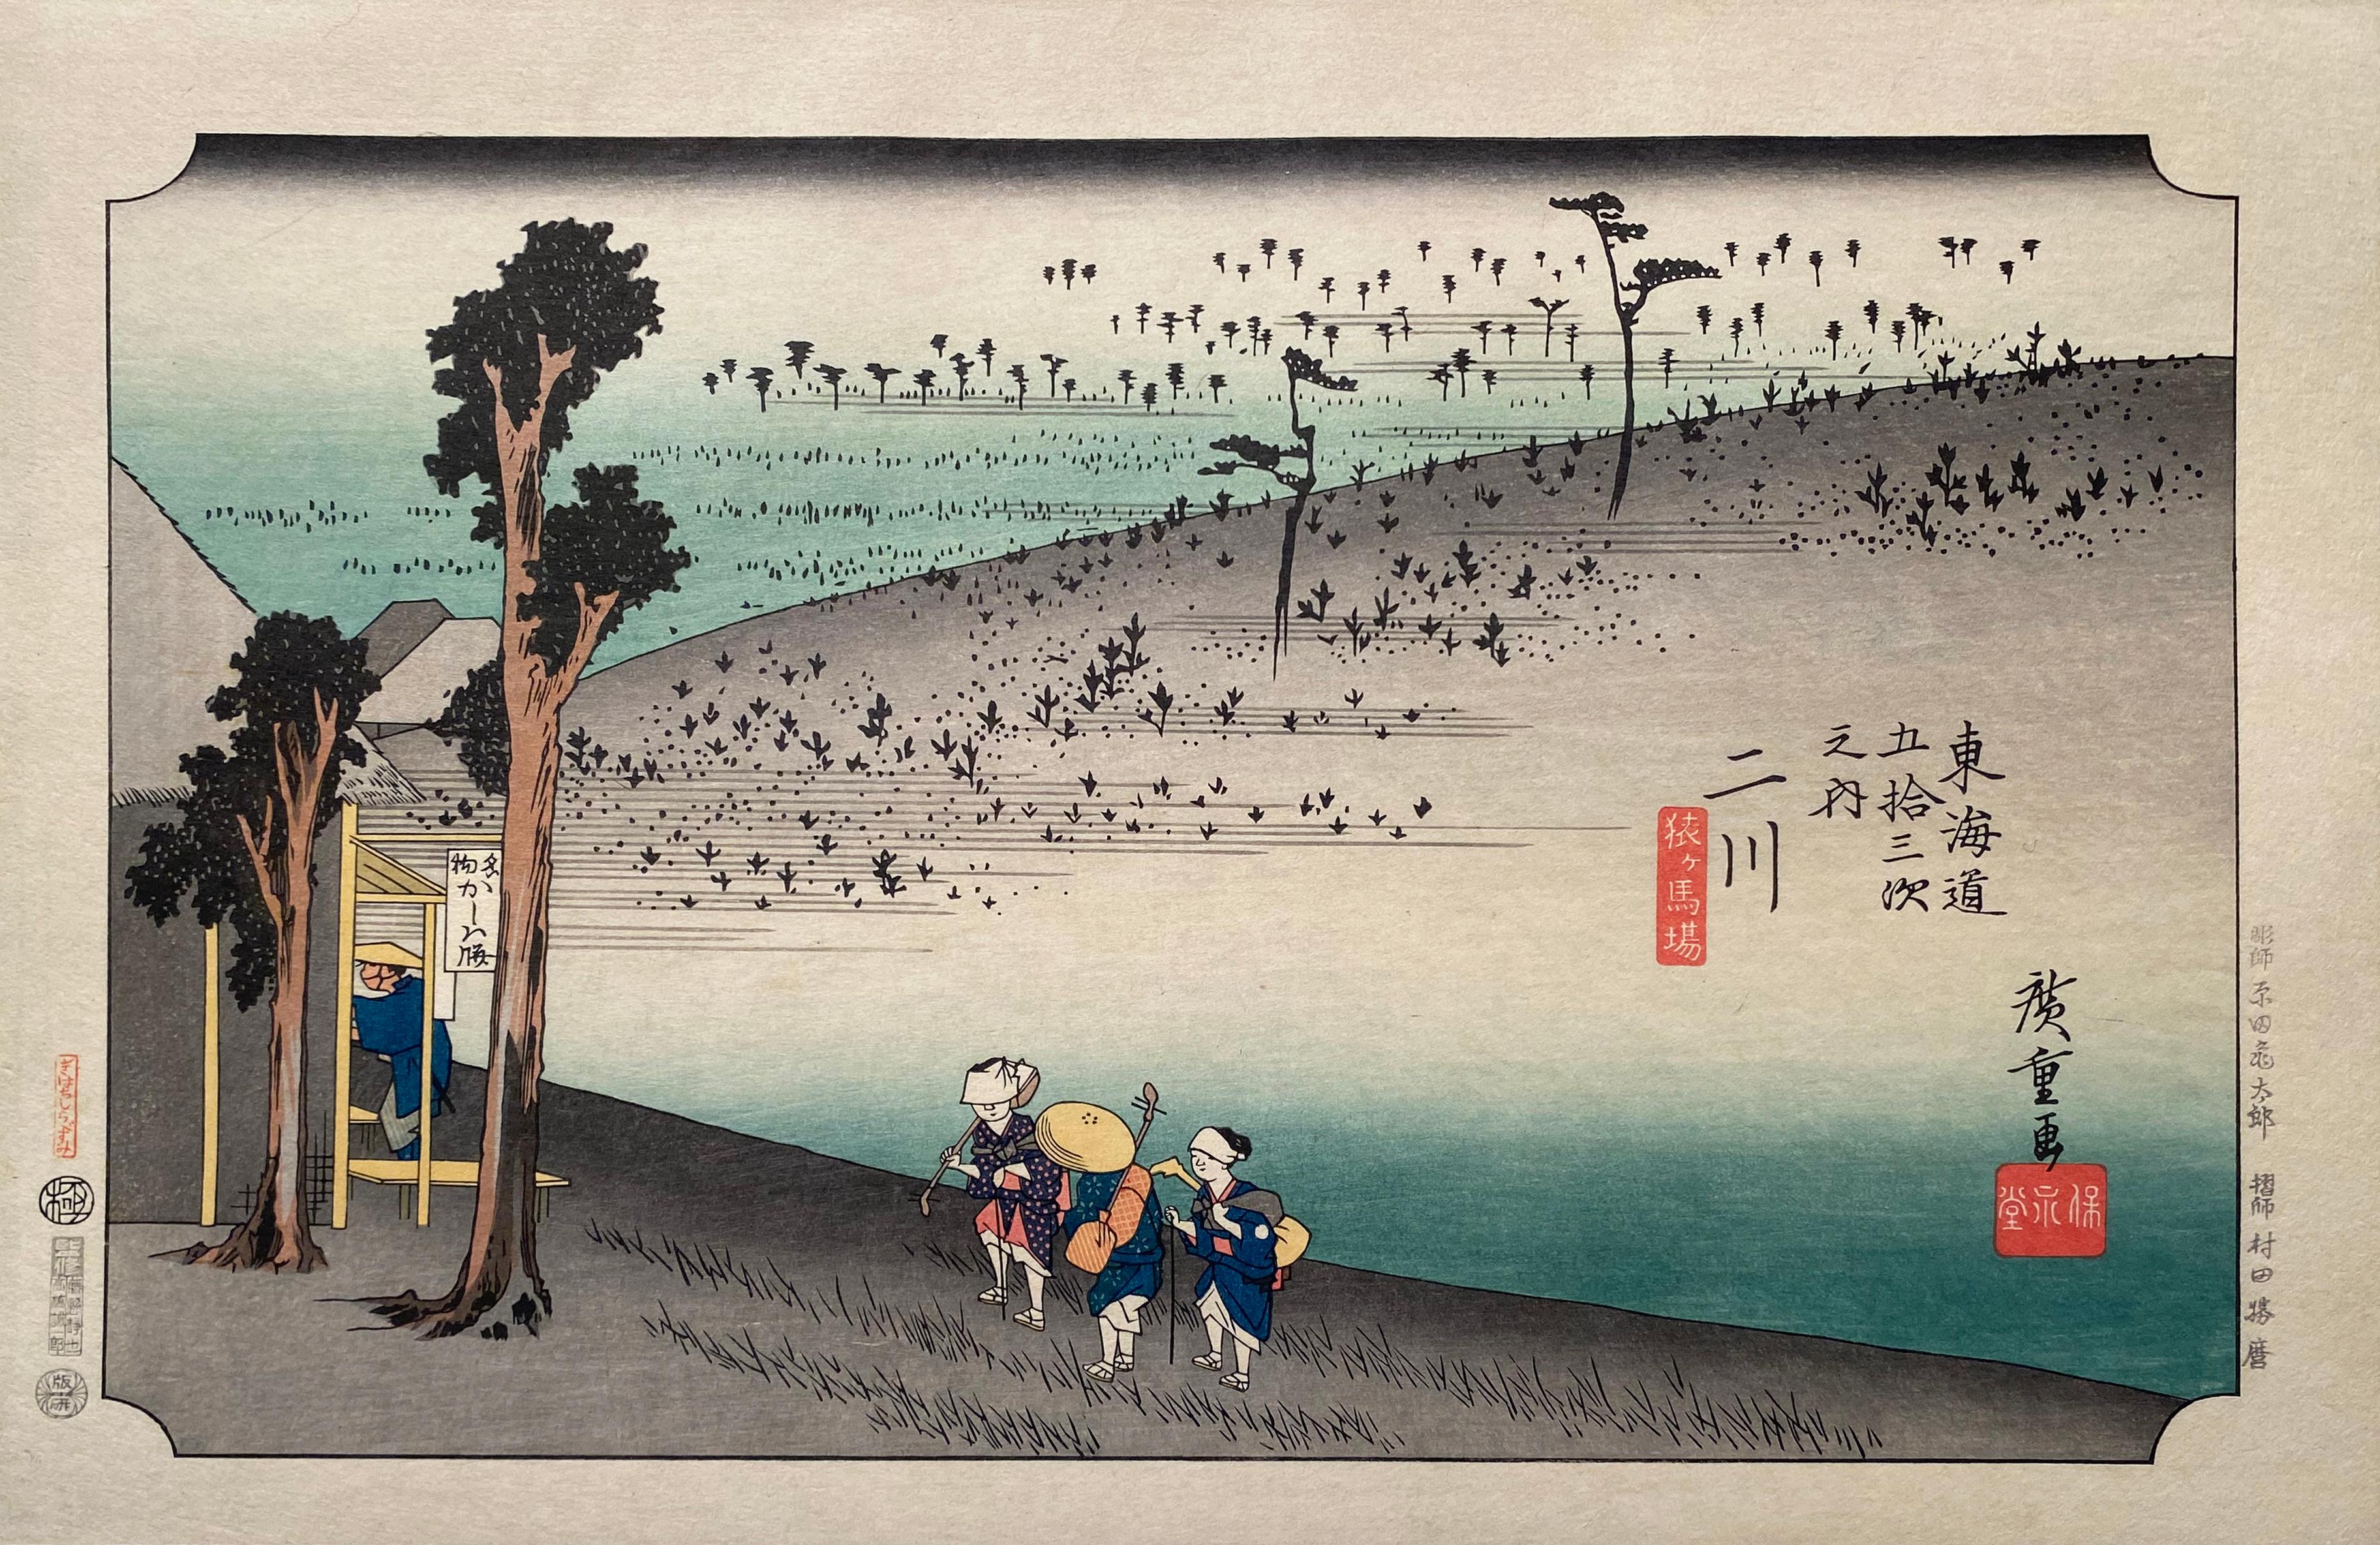 Utagawa Hiroshige (Ando Hiroshige) Landscape Print - 'View of Futakawa', After Utagawa Hiroshige 歌川廣重, Ukiyo-e Woodblock, Tokaido